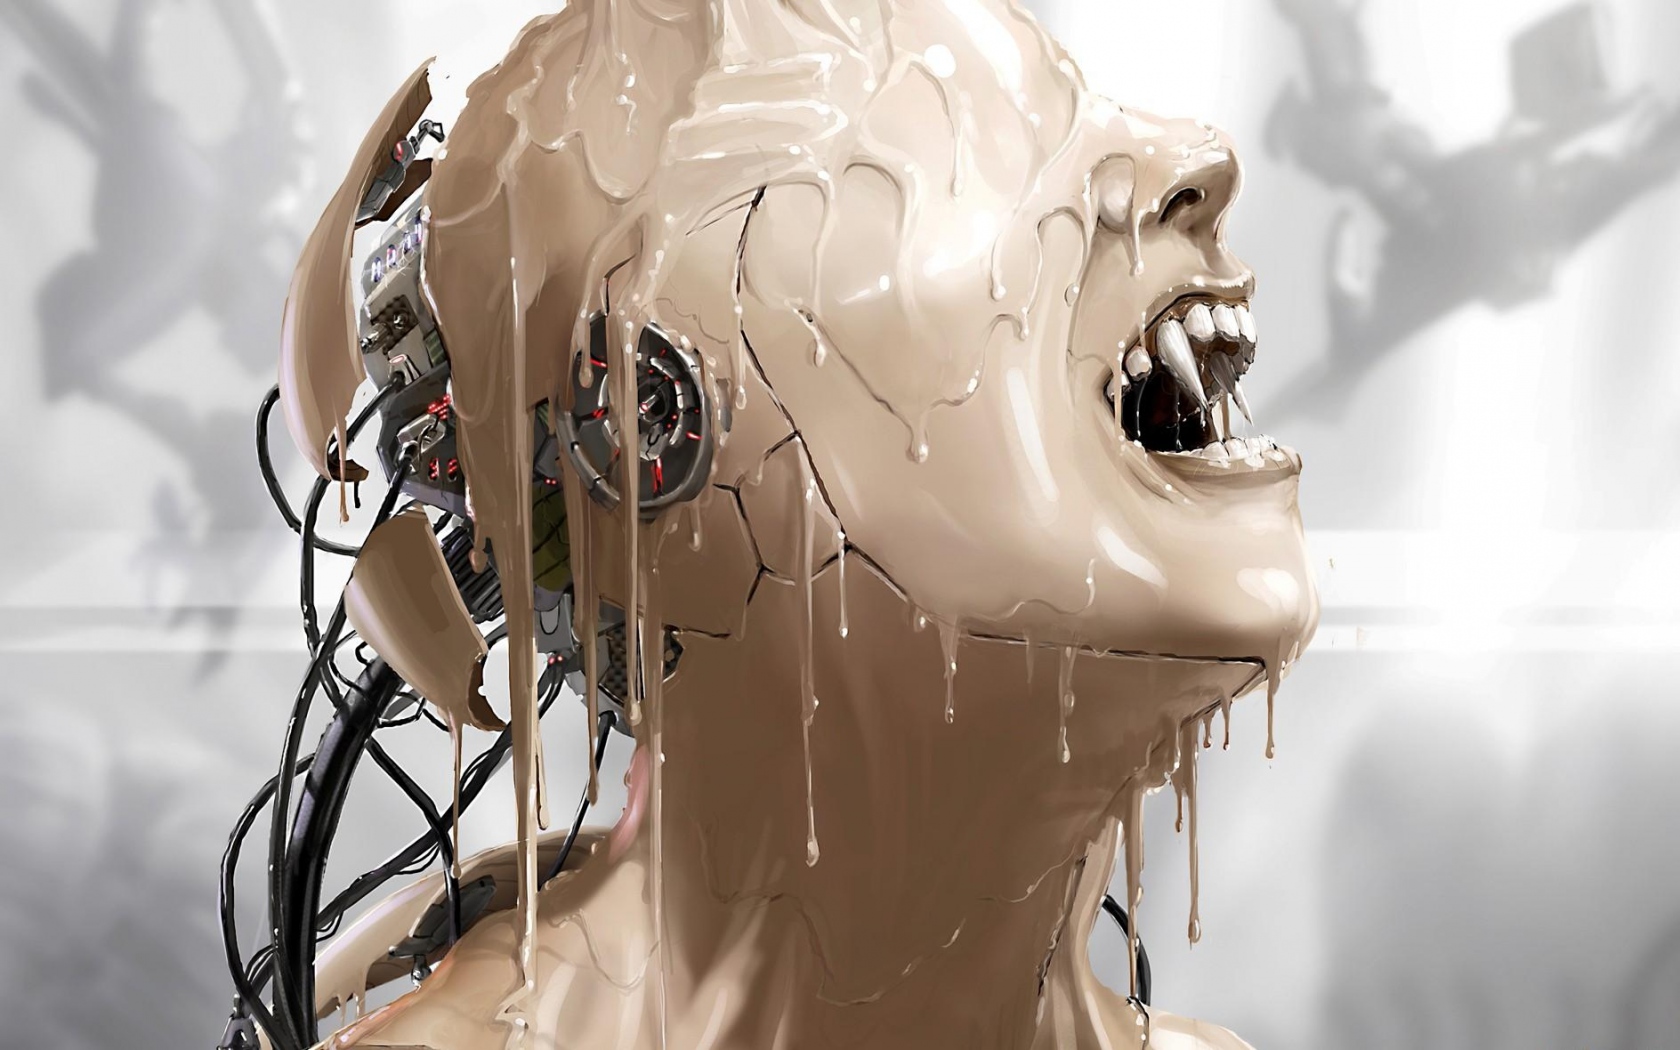 General 1680x1050 vampires androids robot futuristic artwork science fiction cyborg teeth machine